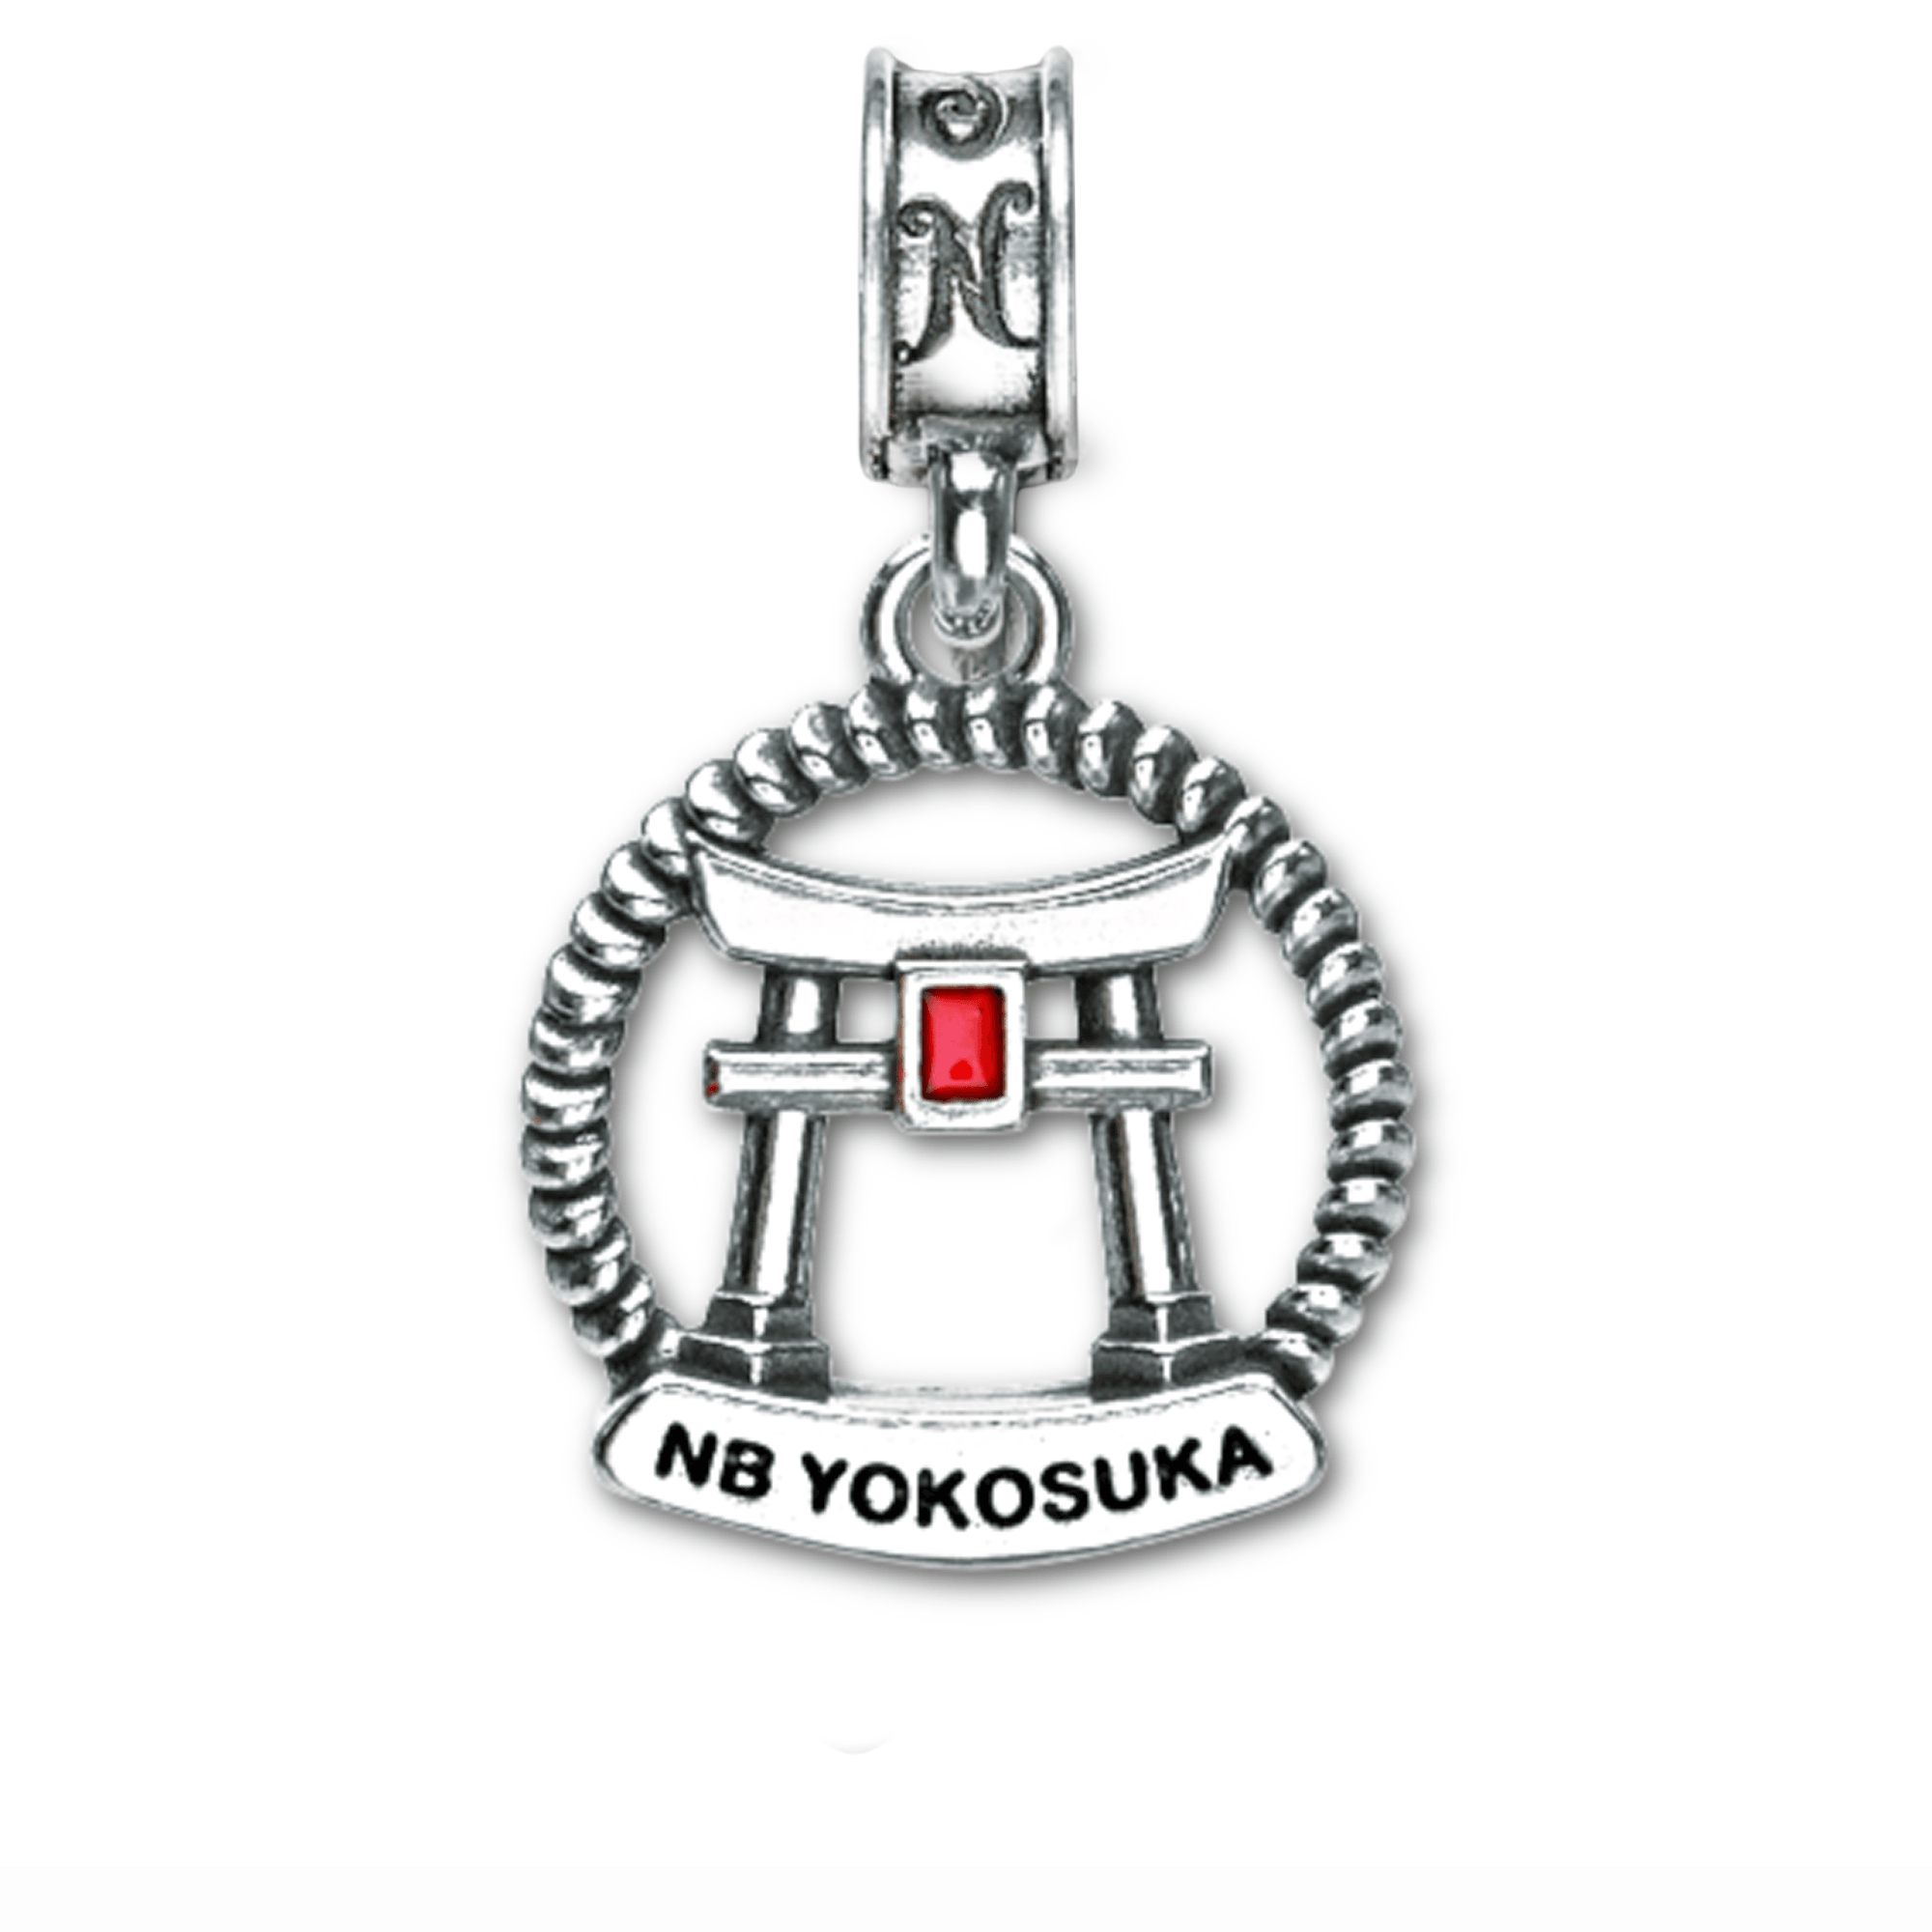 Military Jewelry, Military Charms, Navy, USN, Military Gifts, NB Yokosuka Japan